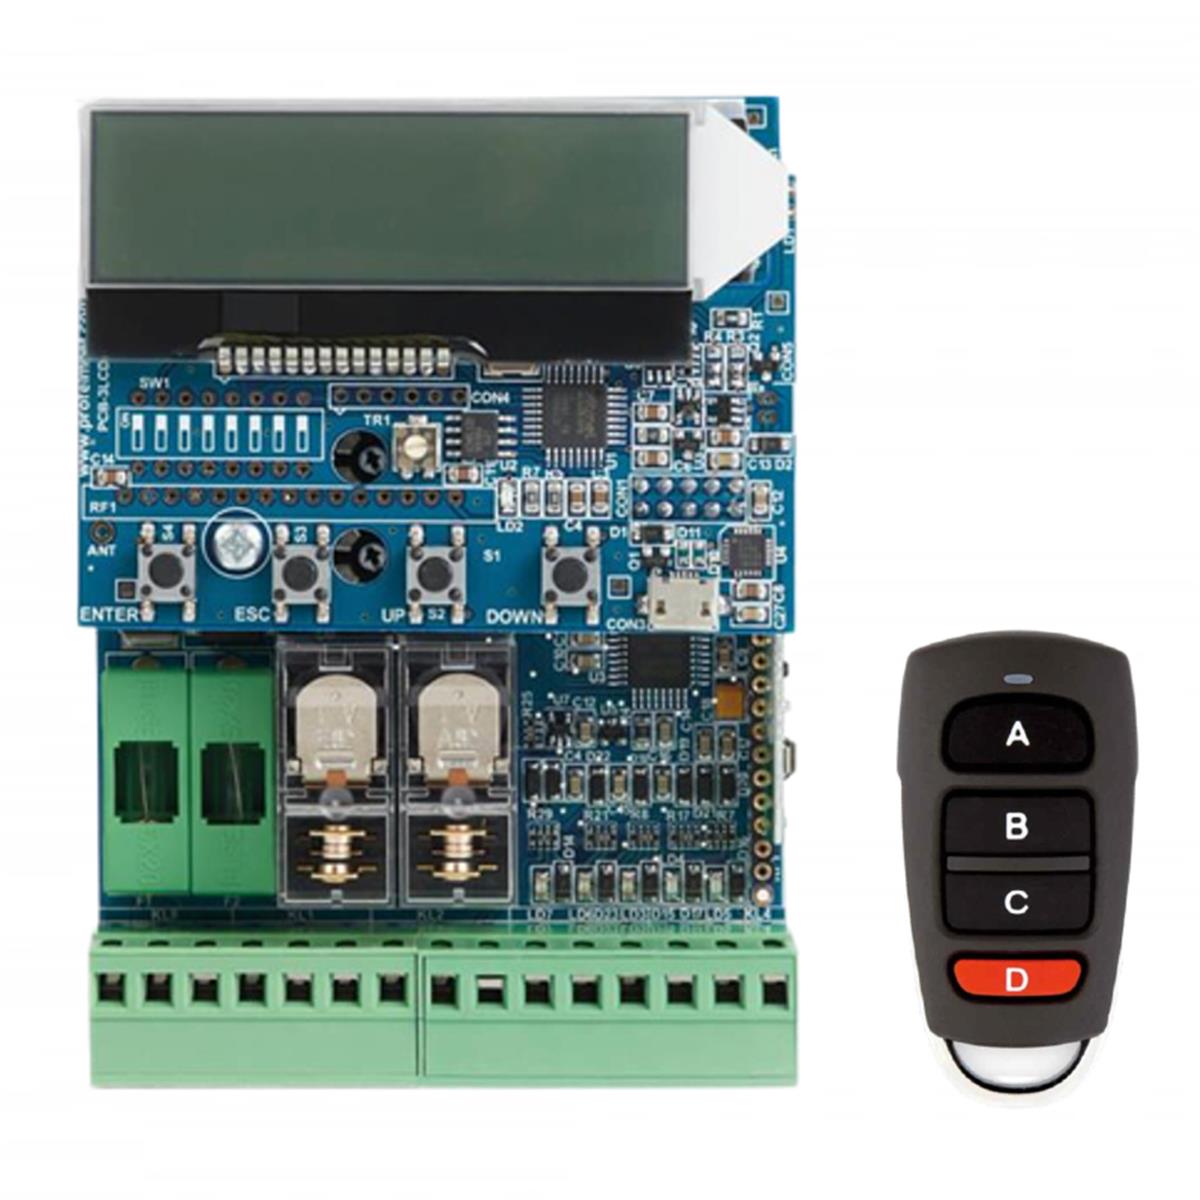 4050 LCD Profelmnet Πίνακας ελέγχου αυτοματισμός για μοτέρ 24VDC έως 200 watt. Σταθερού κωδικού με 1 χειριστήριο